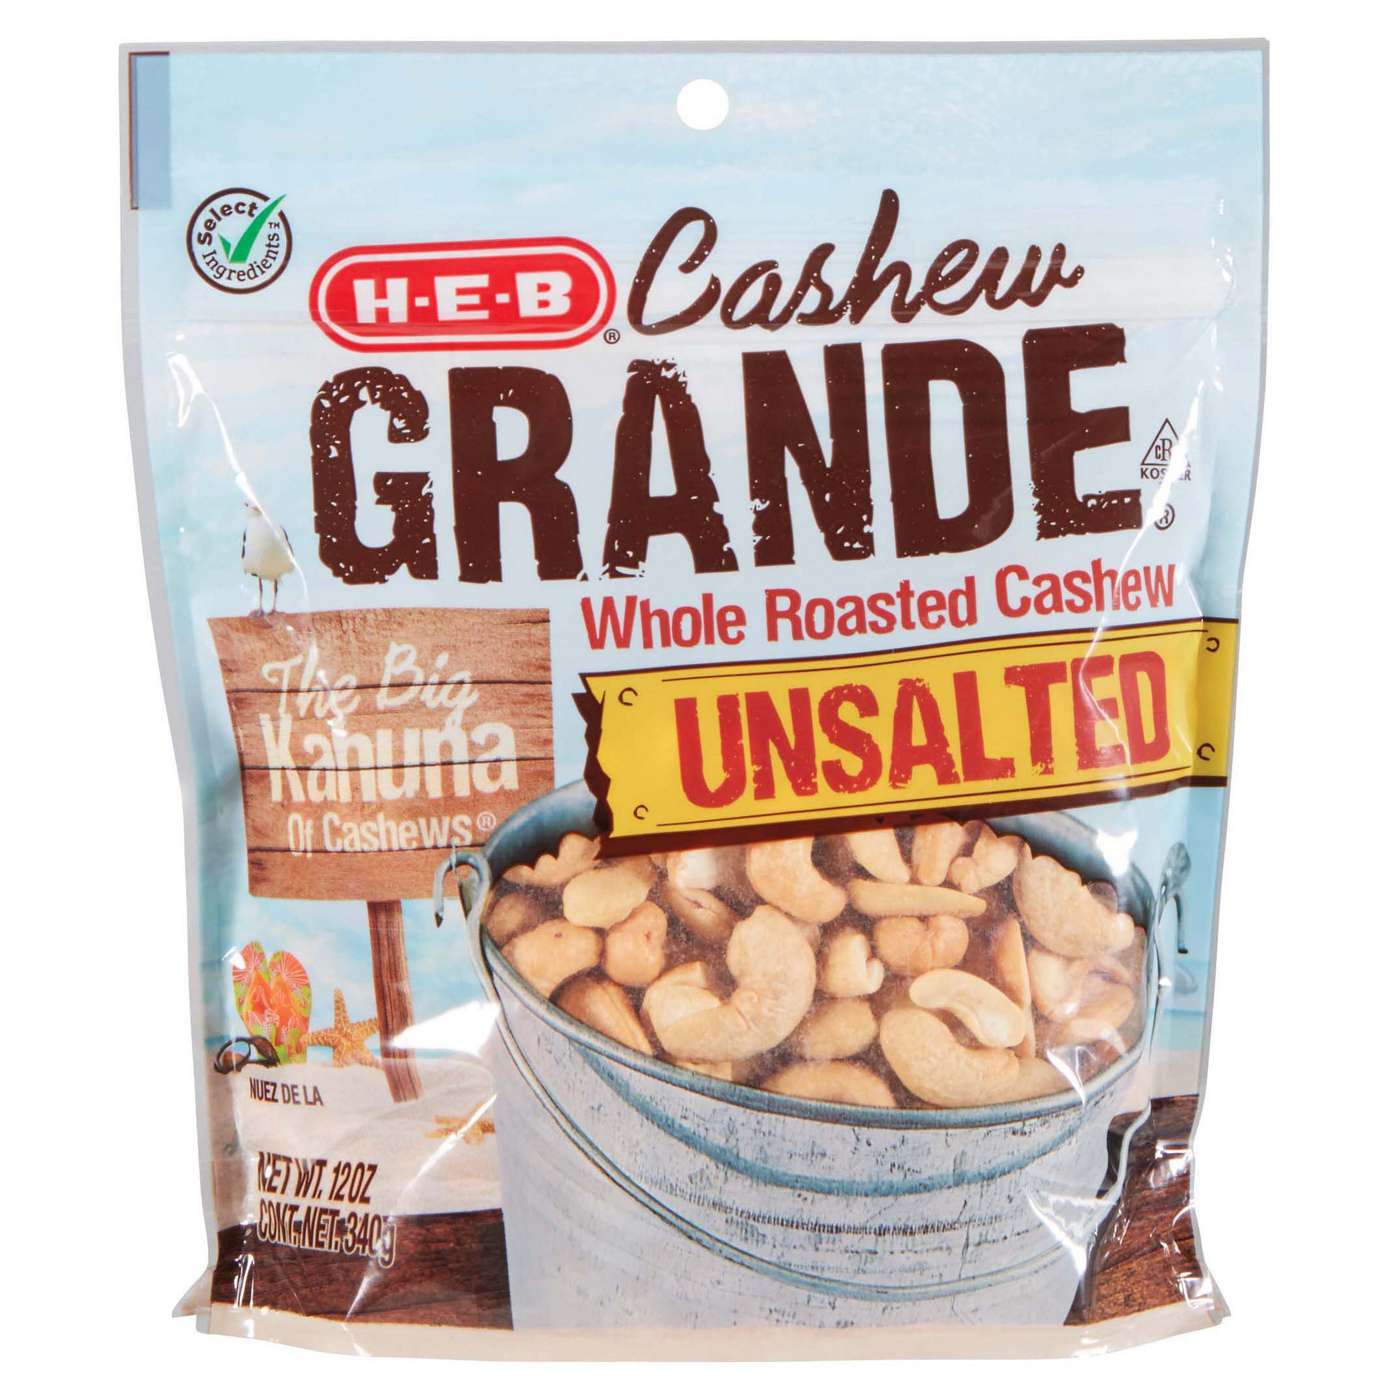 H-E-B Cashew Grande Unsalted Roasted Whole Cashews; image 1 of 2